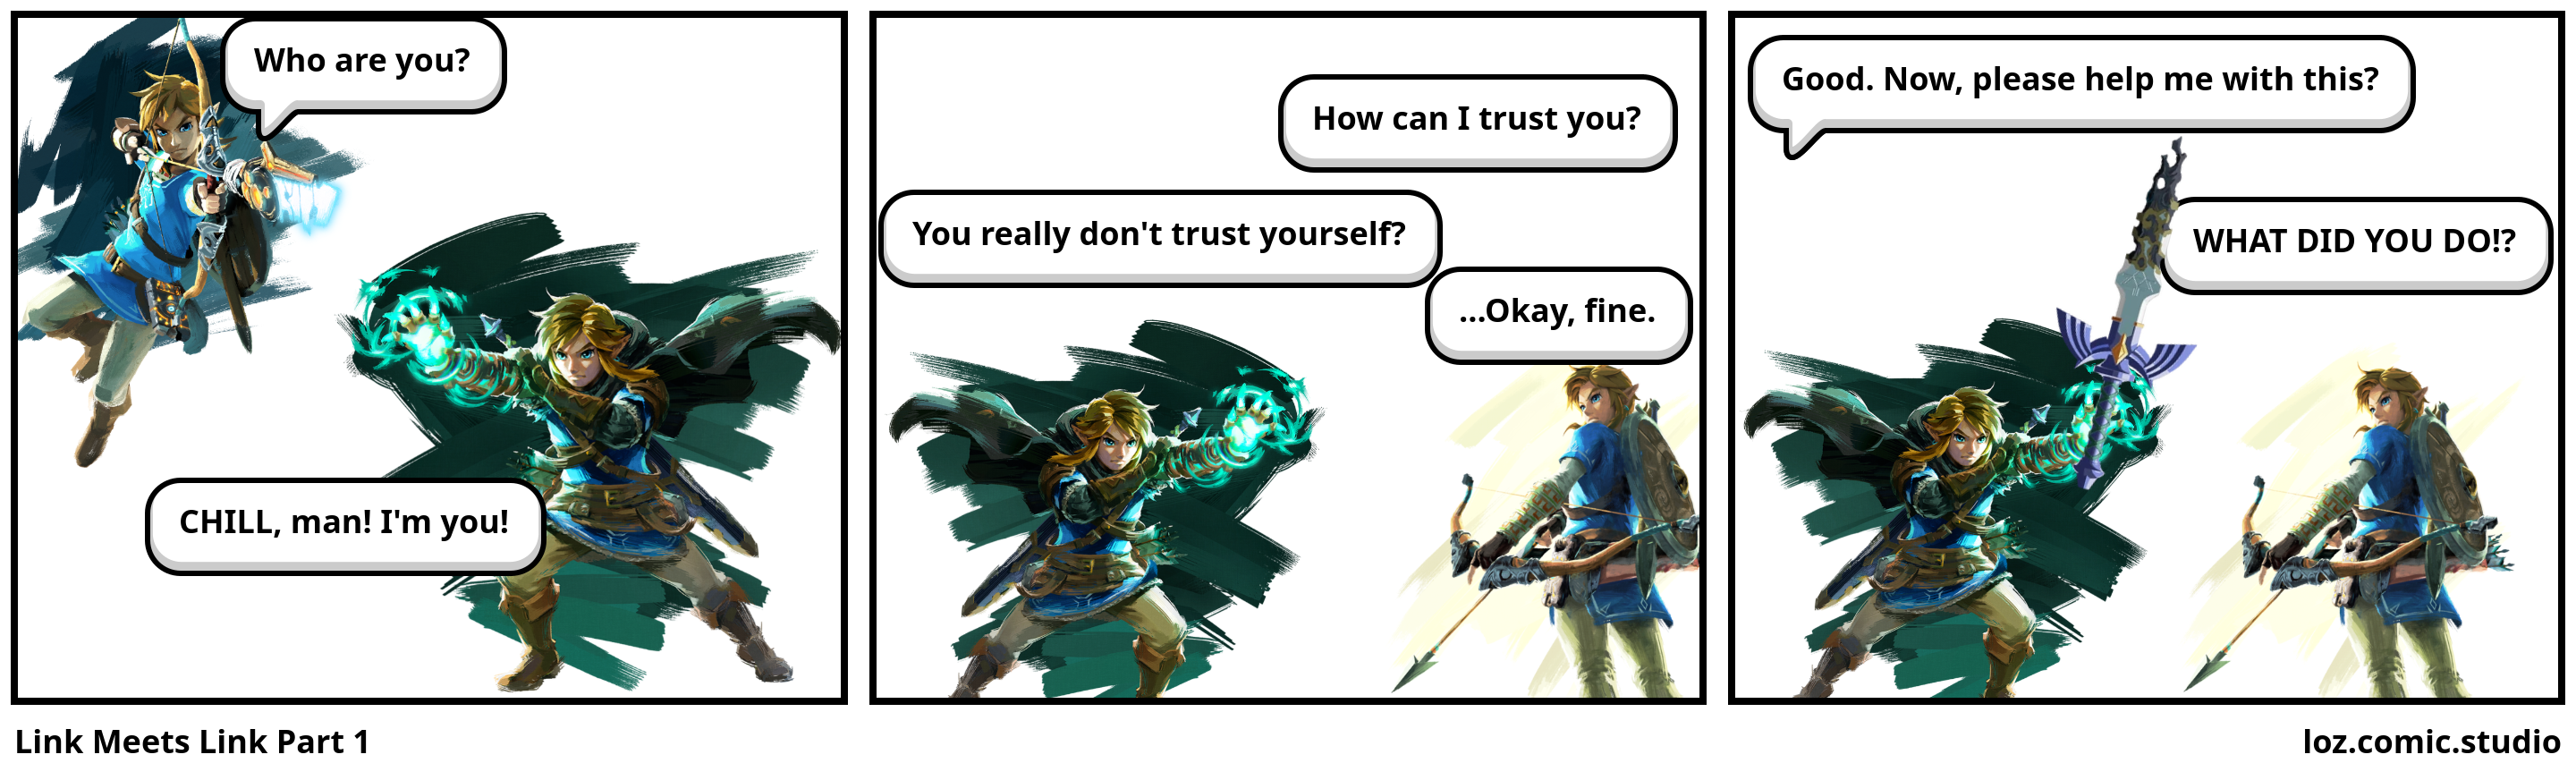 Link Meets Link Part 1